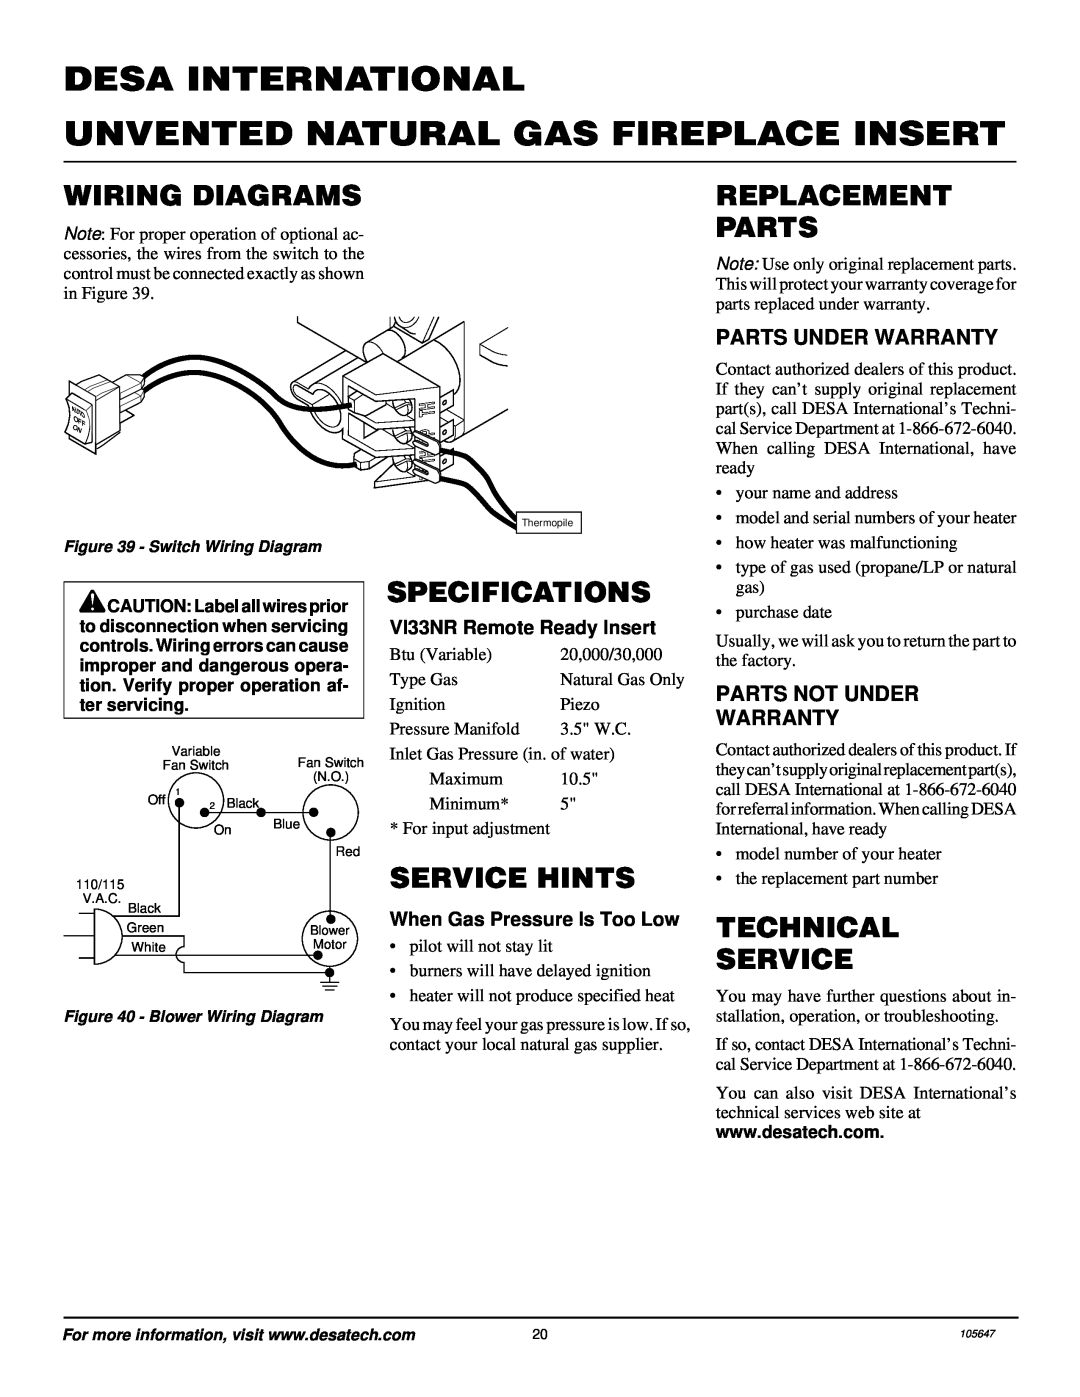 Desa VI33NR Wiring Diagrams, Replacement Parts, Specifications, Service Hints, Technical Service, Desa International 